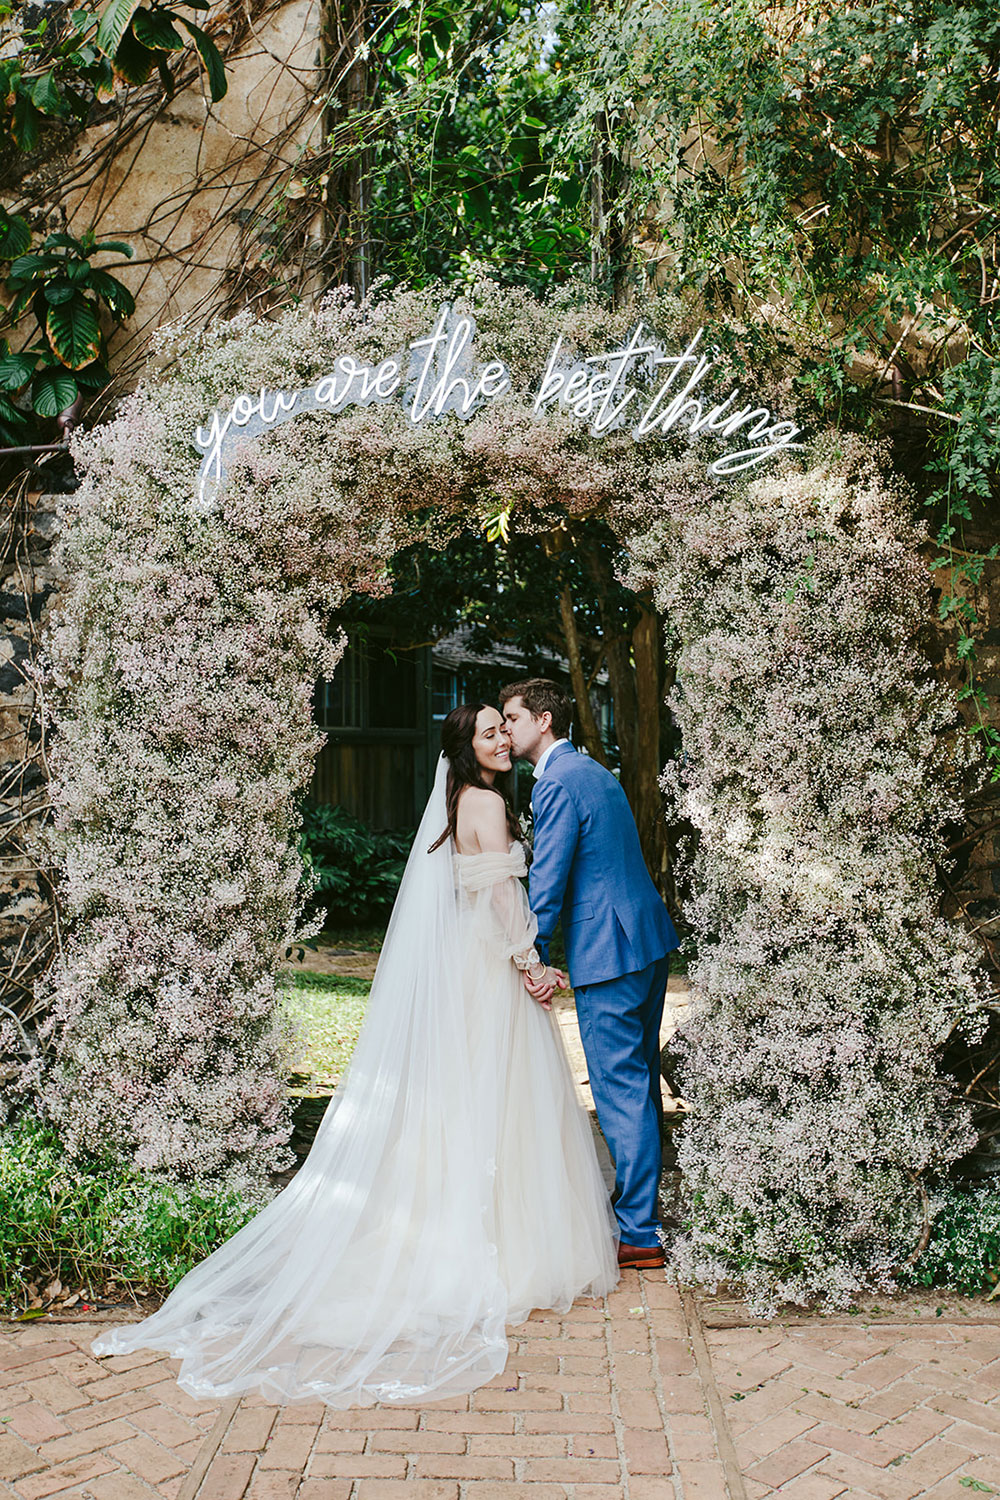 Lush Maui garden wedding with a Baby’s Breath arch